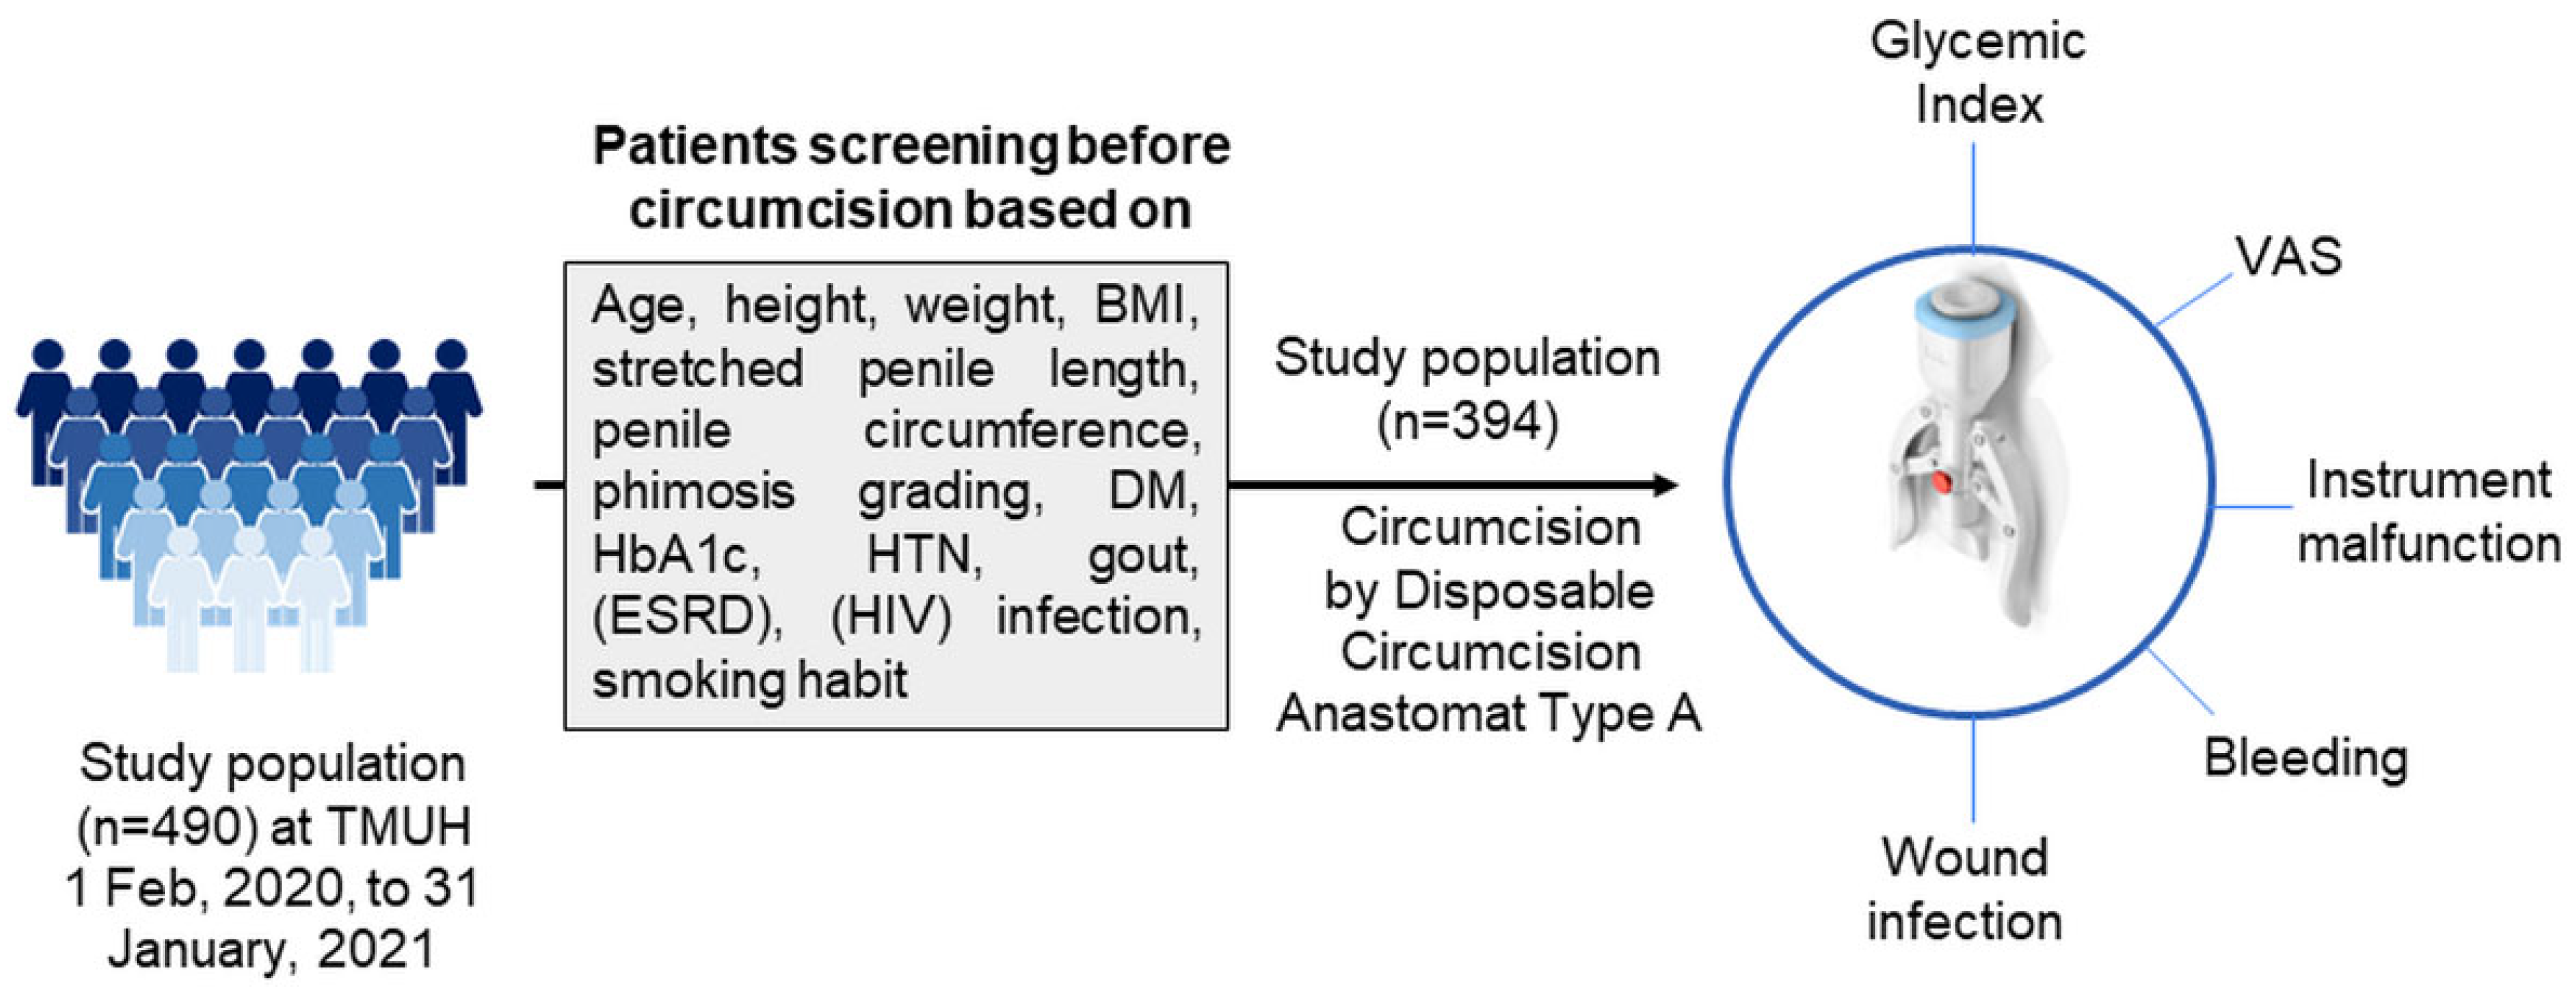 Circumcision with 